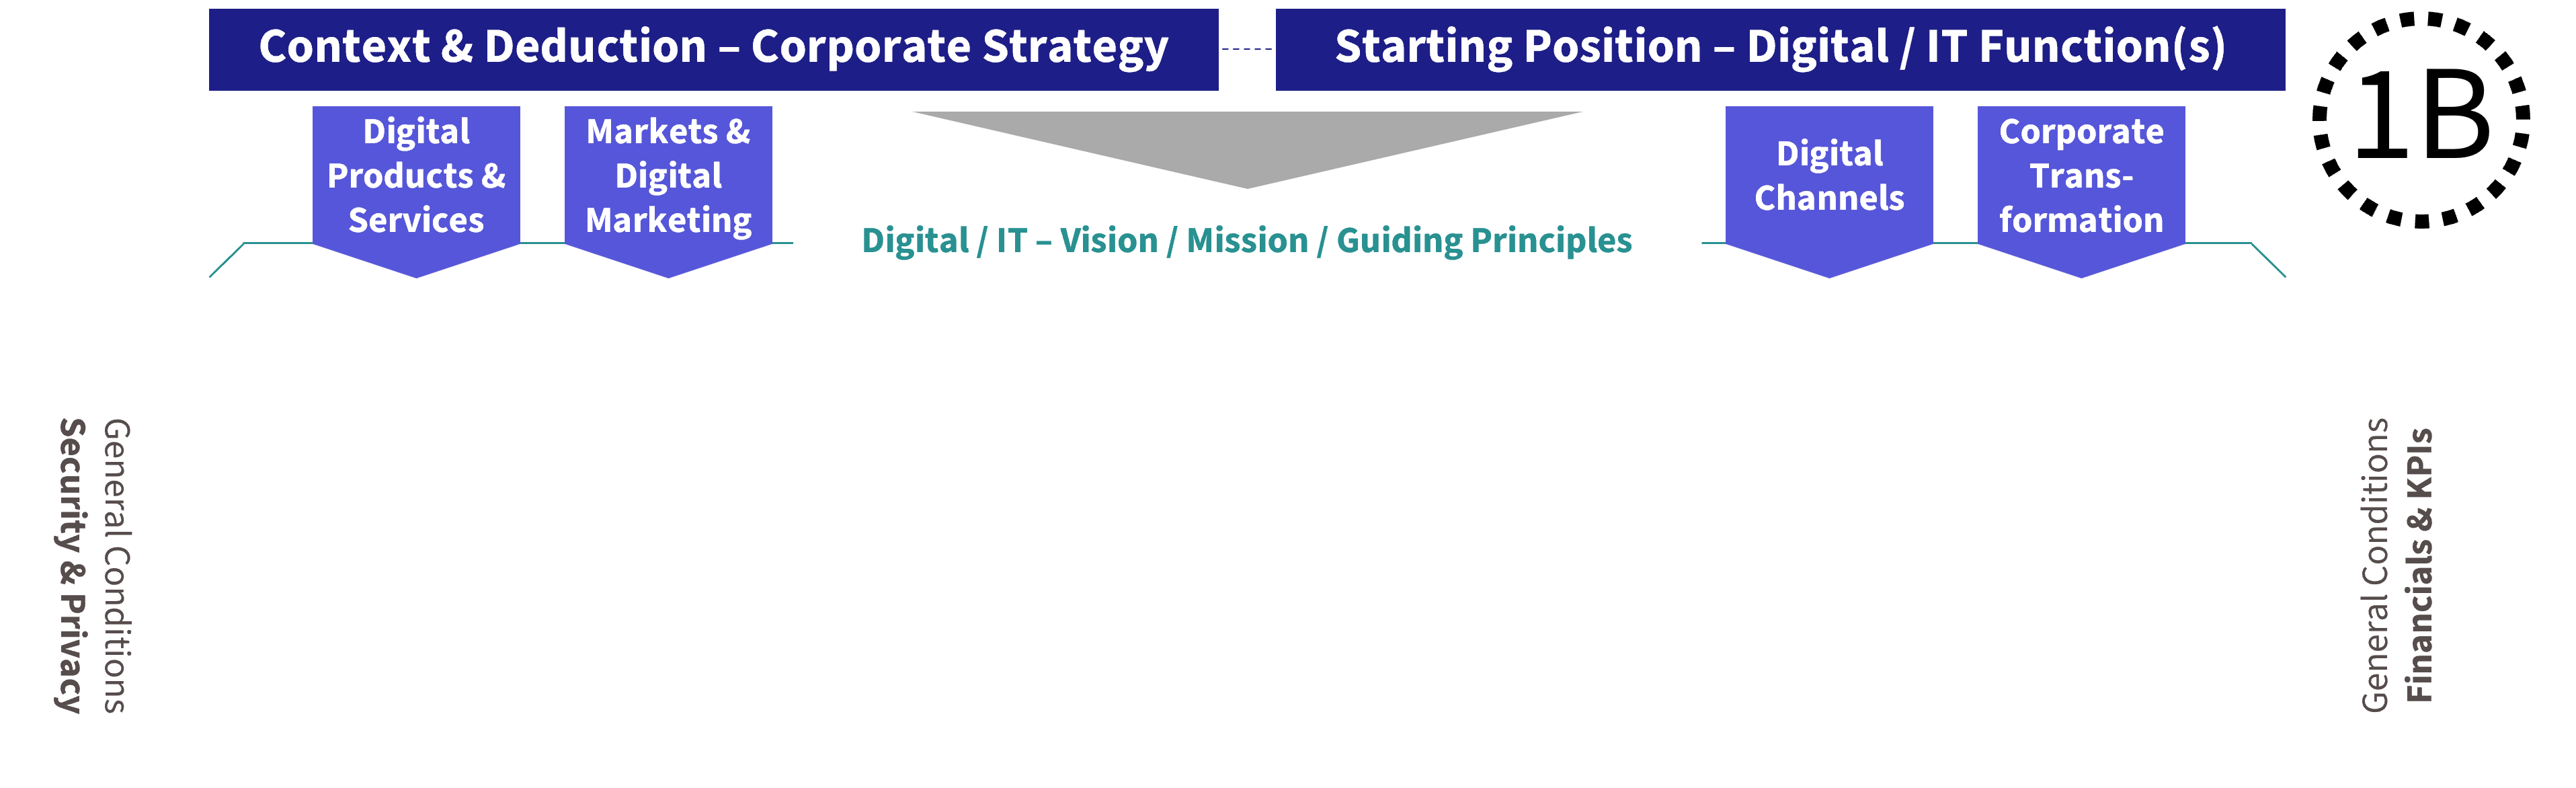 CKC Digital IT Strategy Meta Framework - Phase 1 B - Elements